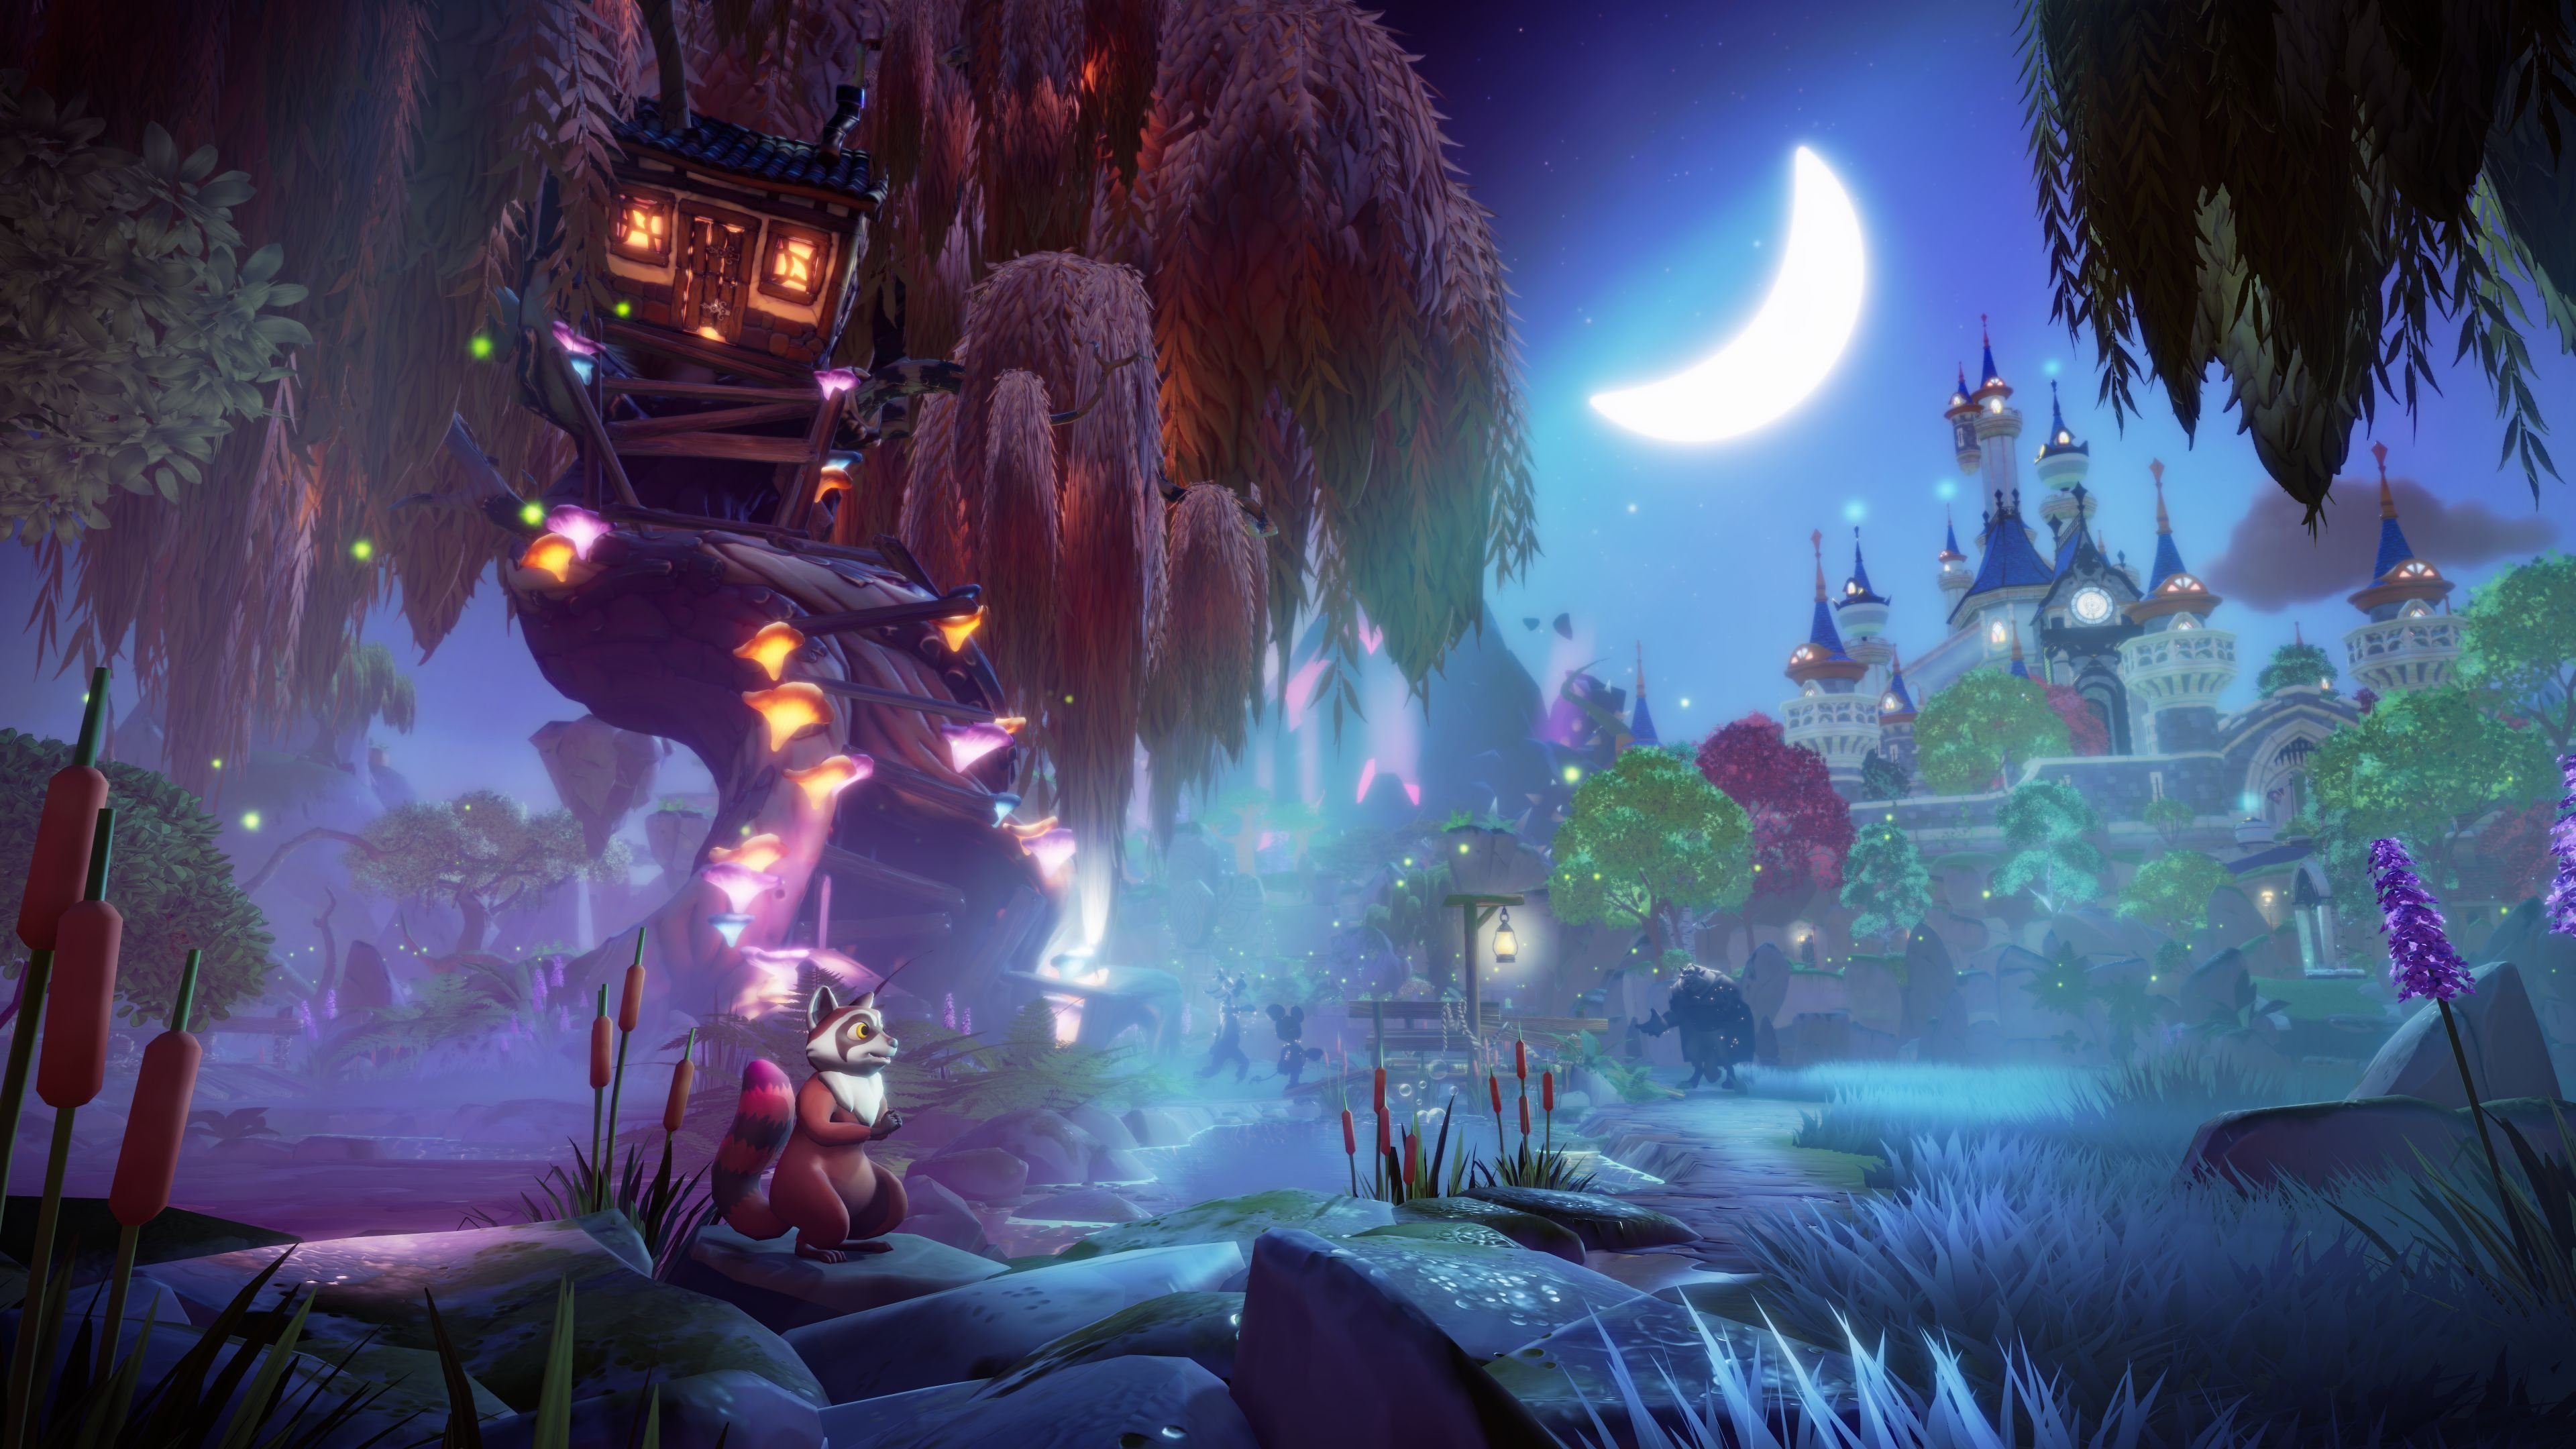 Nighthawk Disney Dreamlight Valley: PlayStation Edition Cozy 4